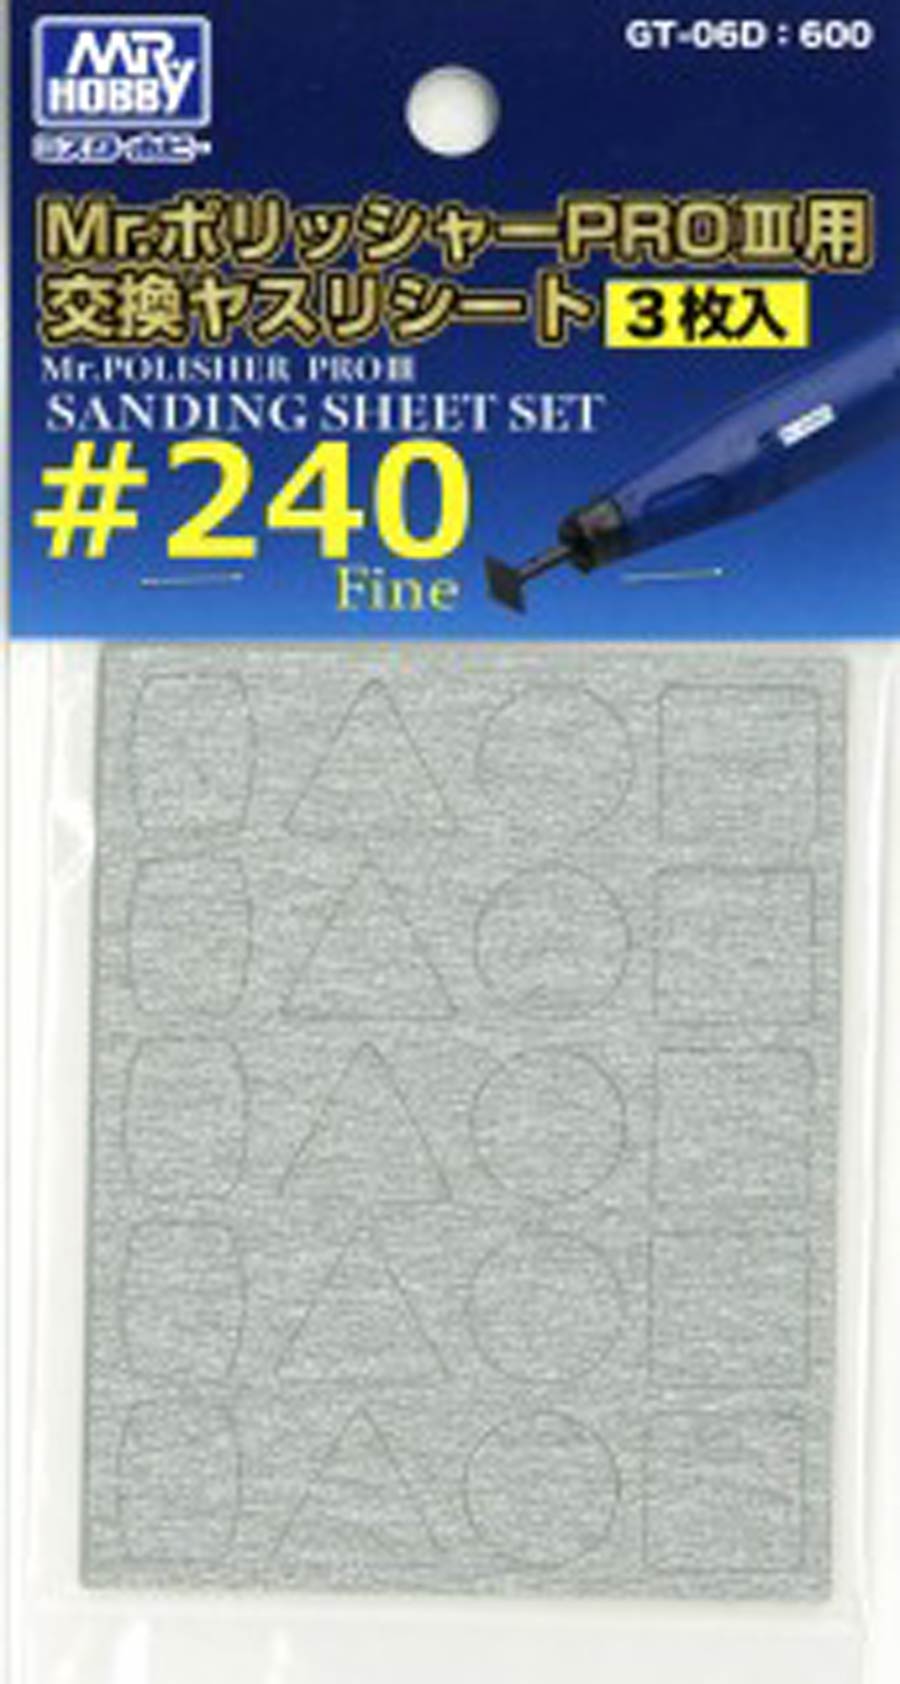 Mr. Hobby Tools - GT-06D #240 Fine Sanding Sheet Set For GT06